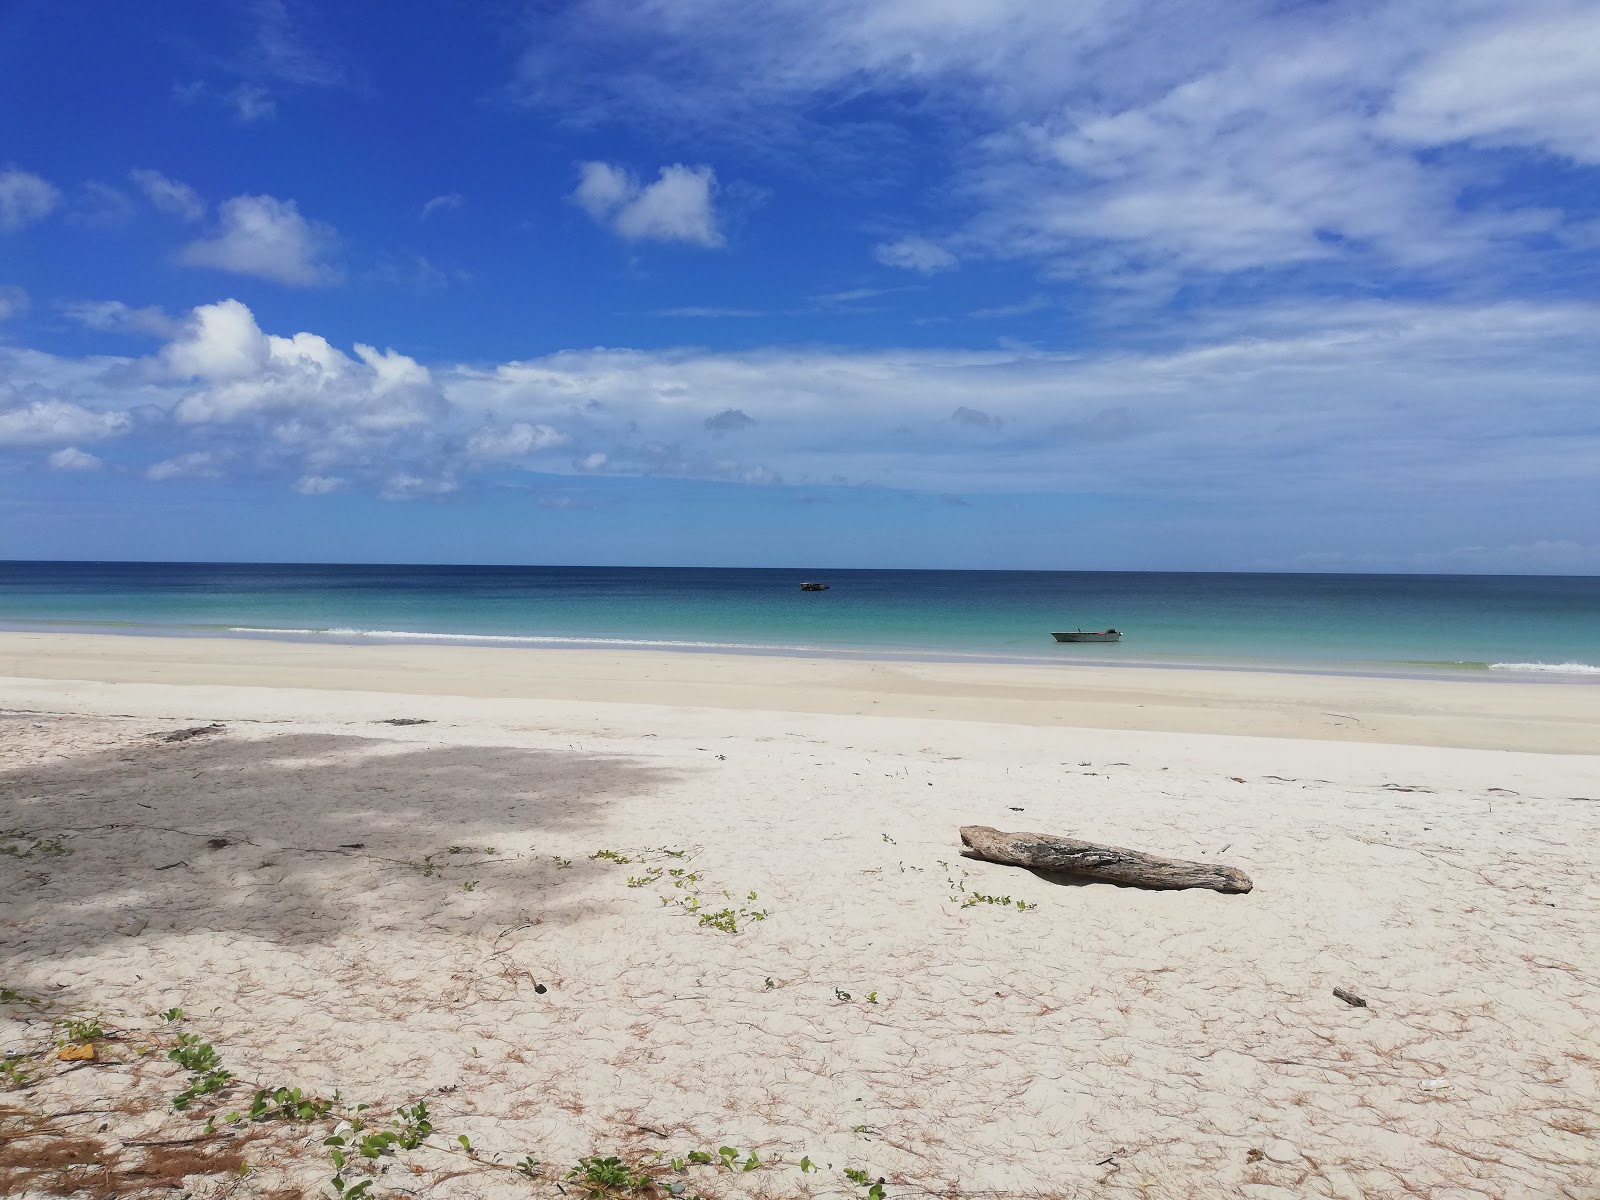 Fotografie cu Kalampunian Beach cu nivelul de curățenie in medie